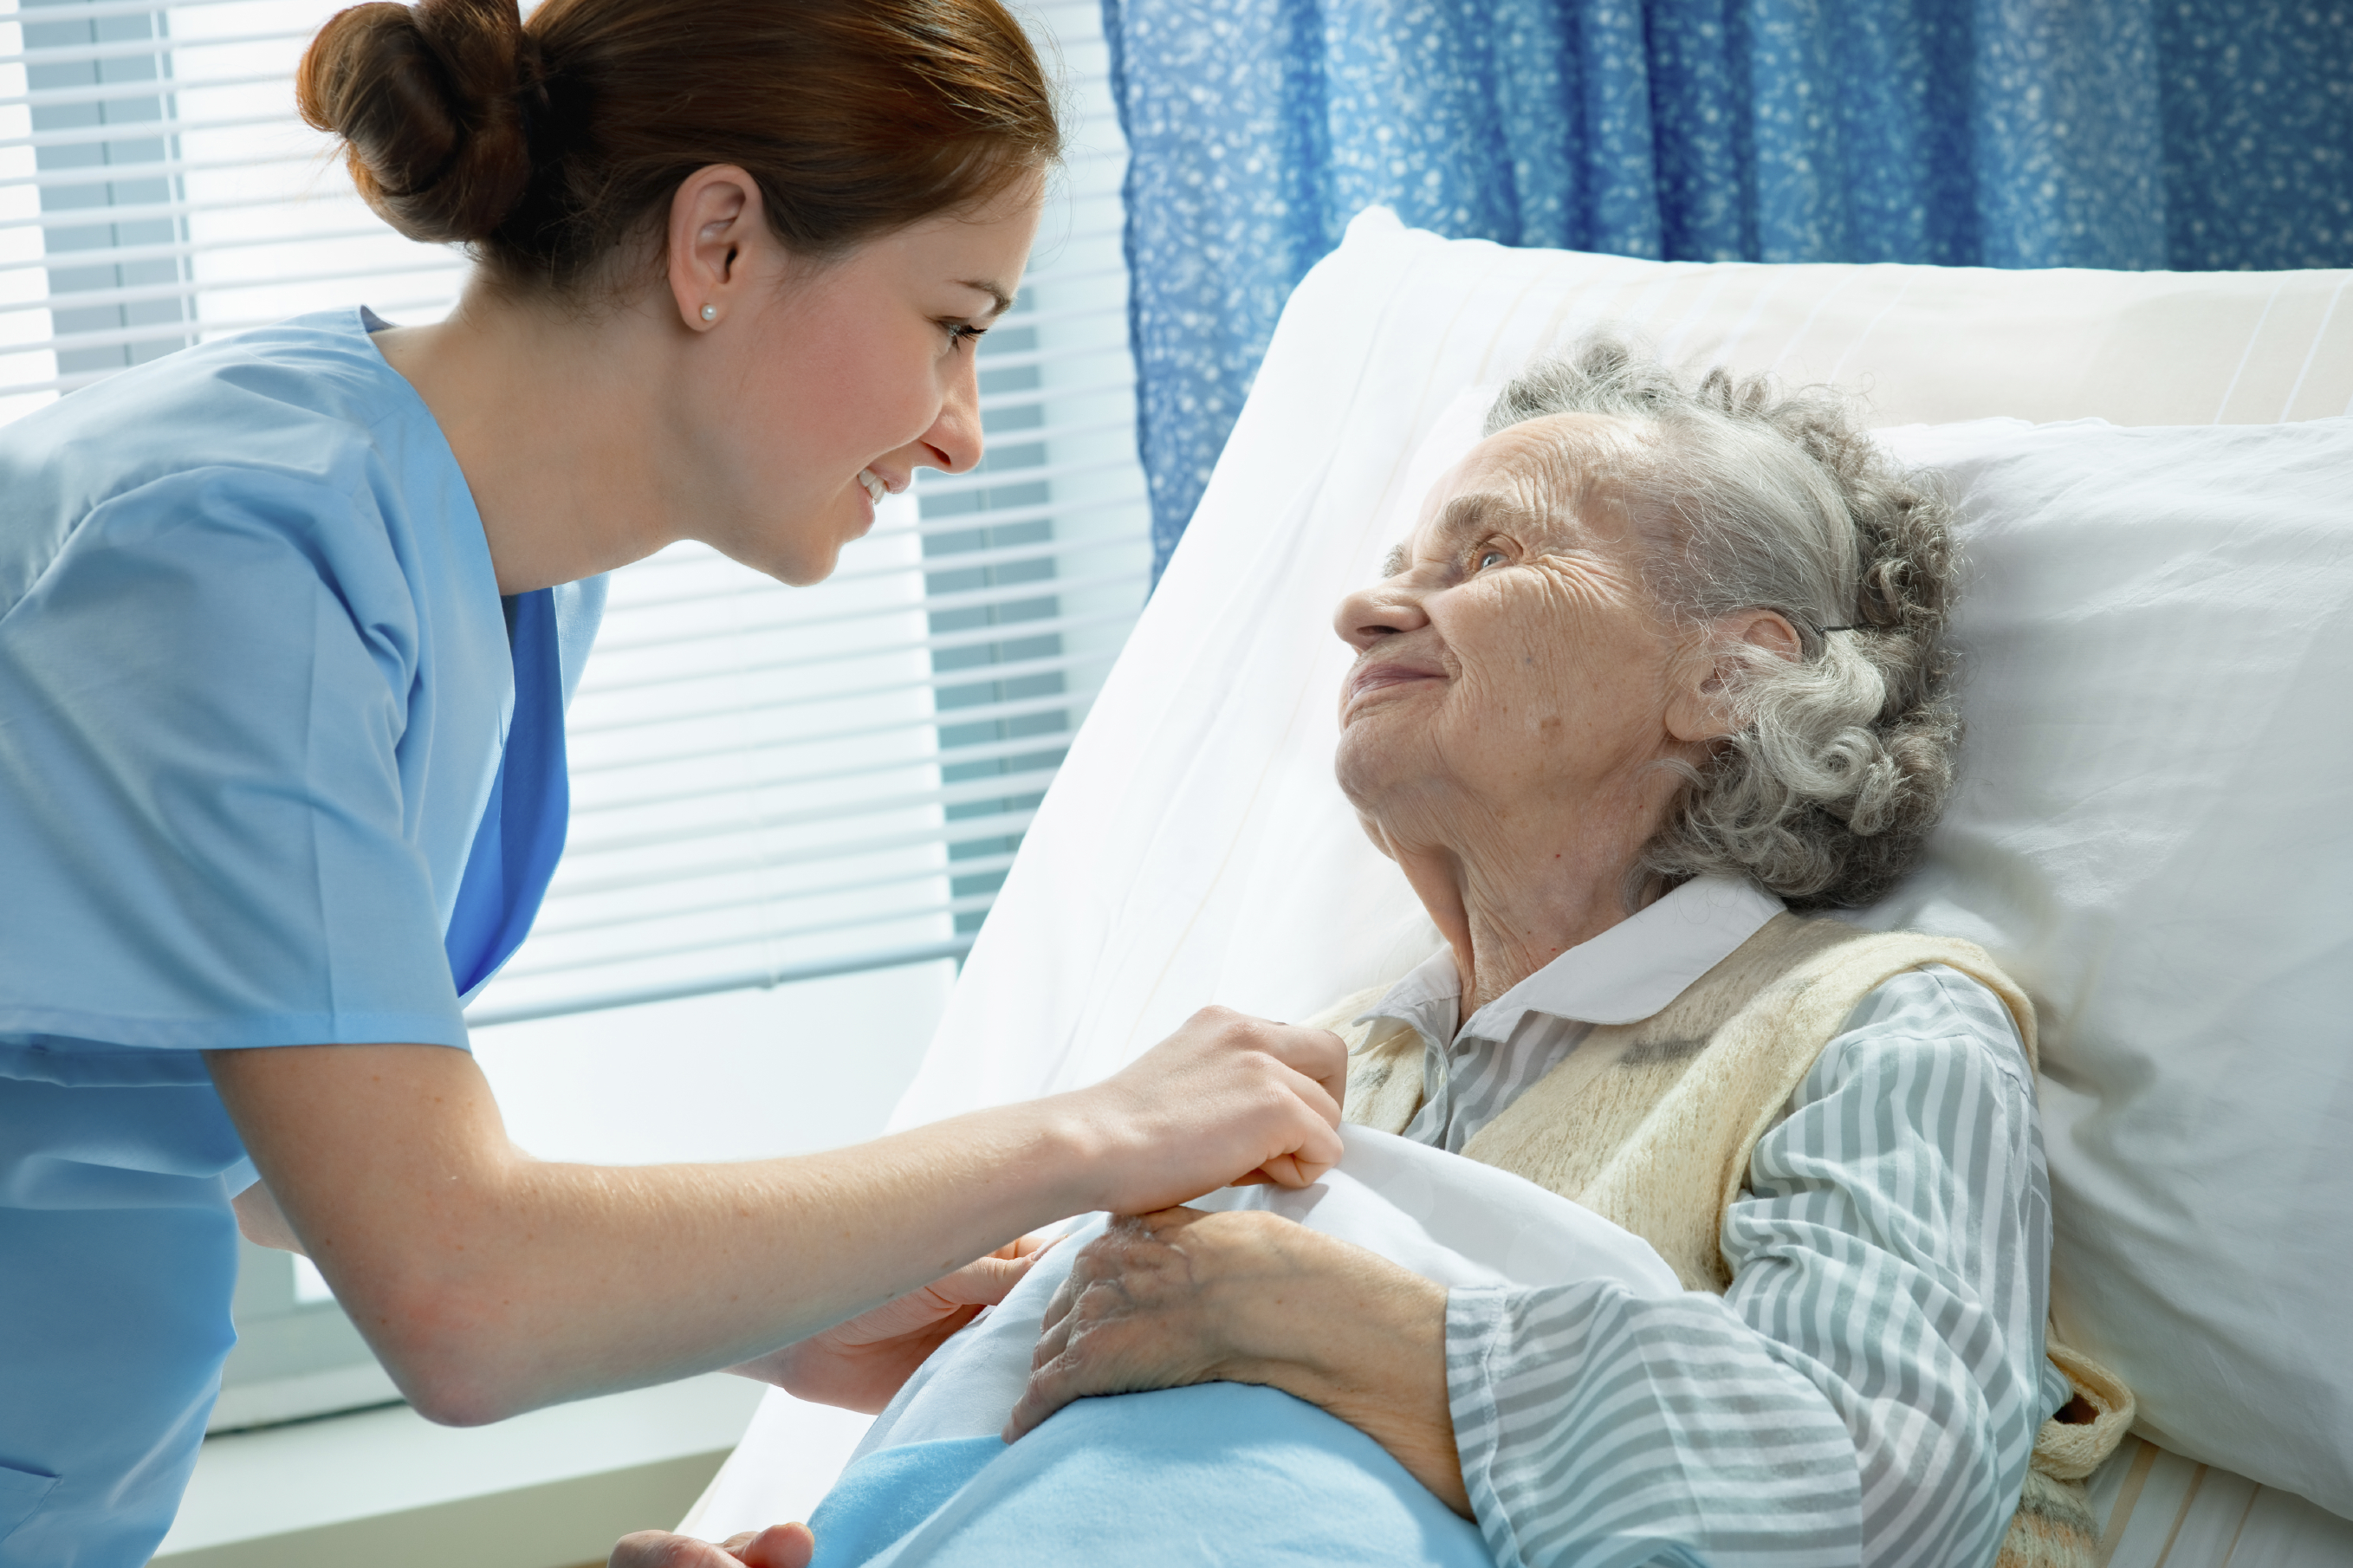 A nurse bedside with an elderly patient.